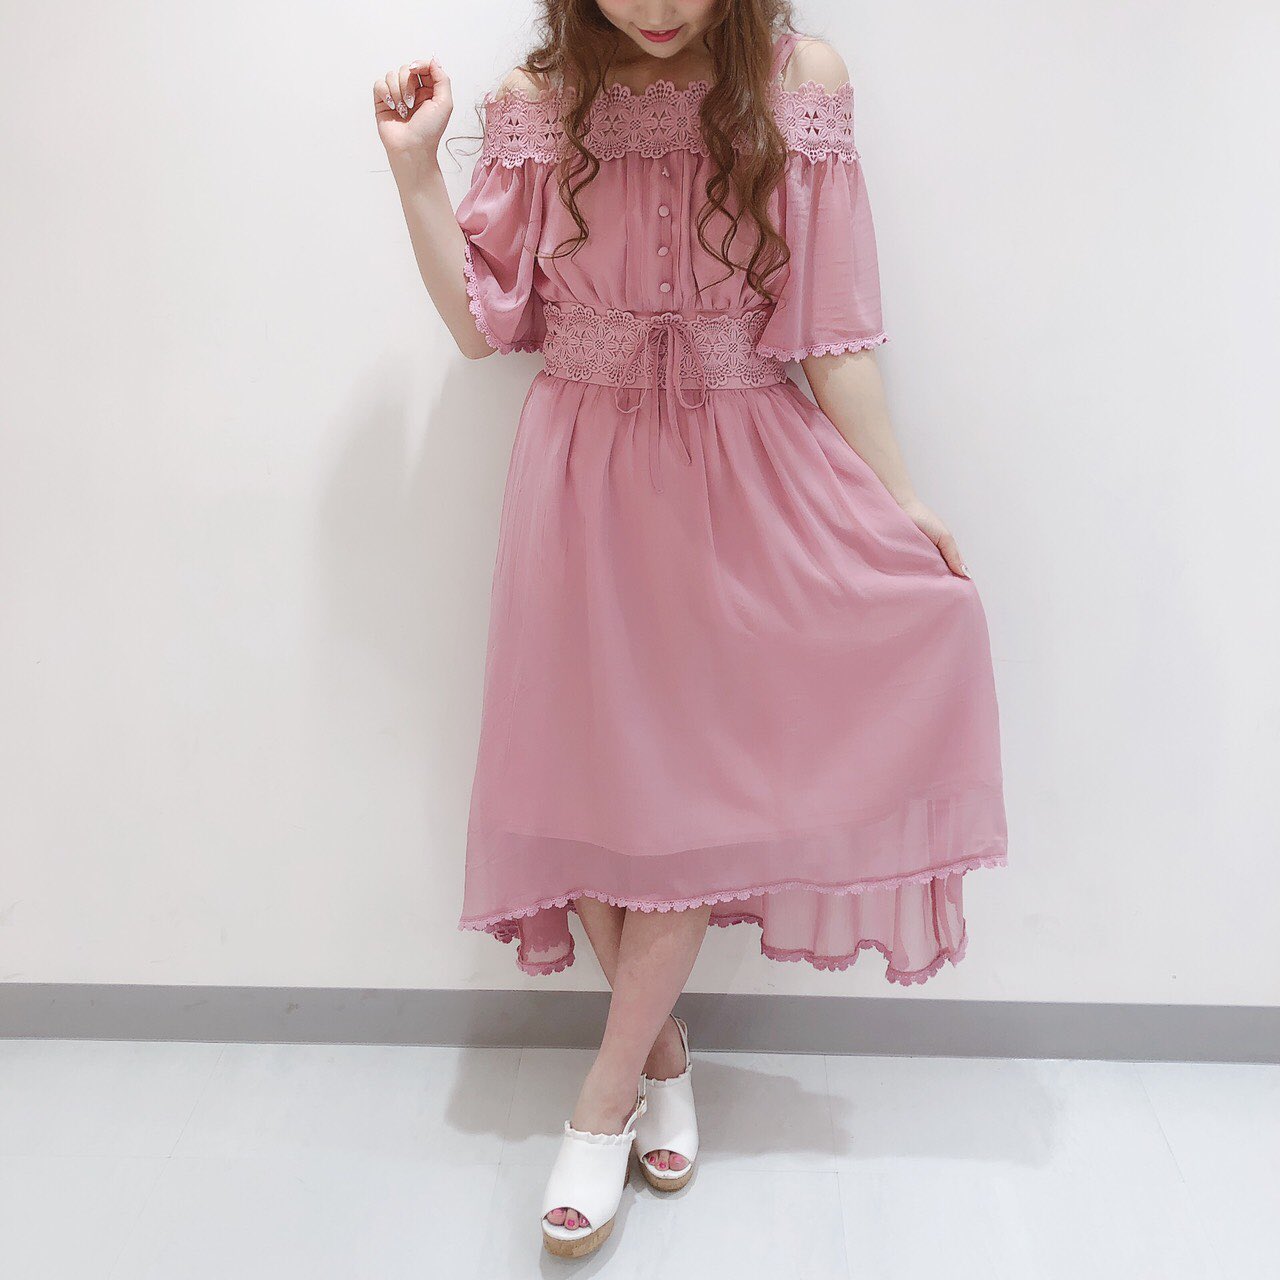 LIZ LISA on Twitter: "*⑅୨୧ 新宿ALTA店 ♡ 大人気item ୨୧⑅* ⚡️即日完売⚡️の大人気ワンピースが 新色